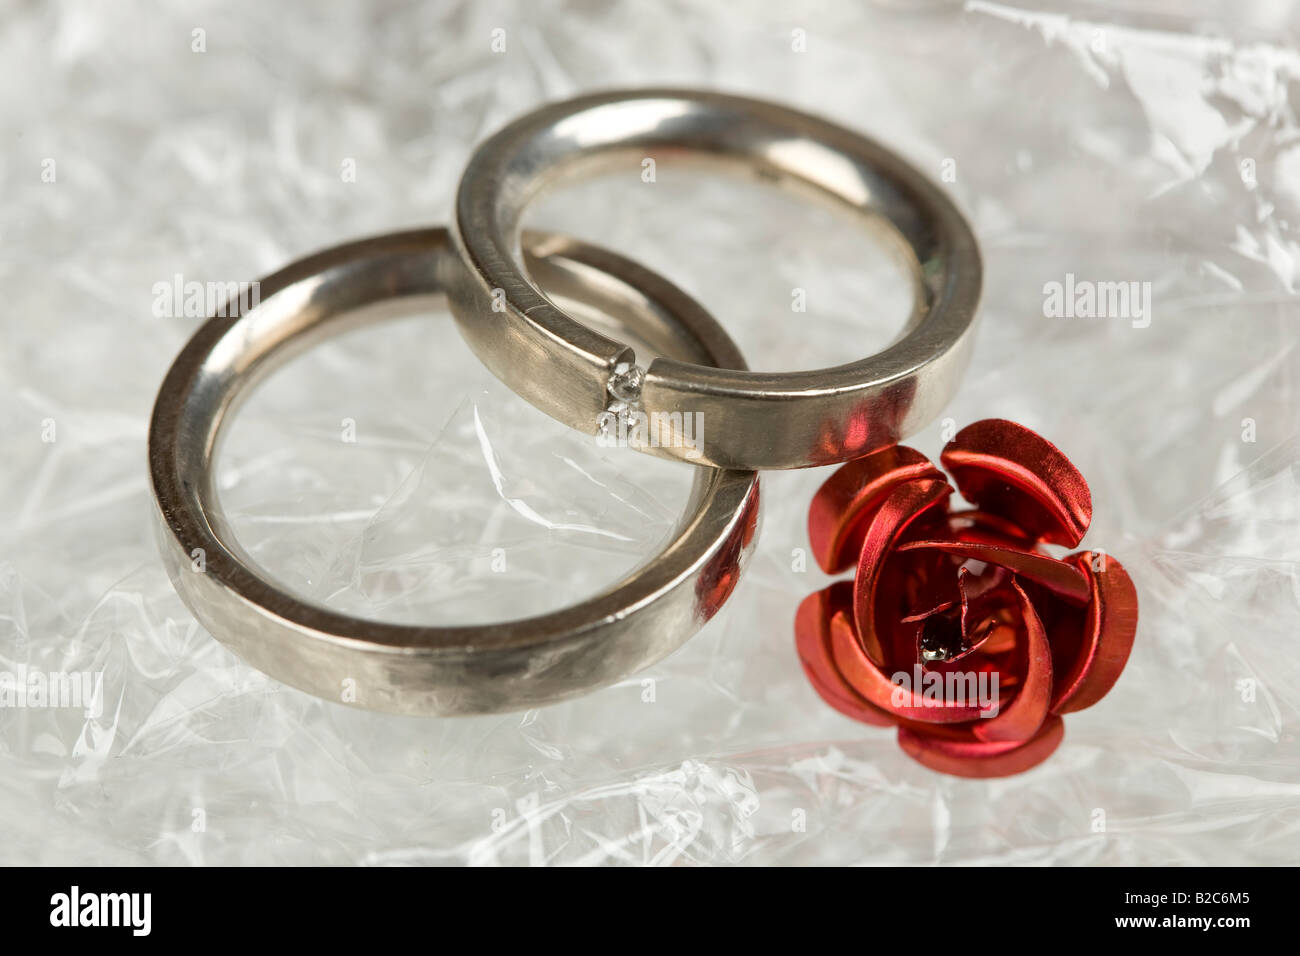 Engagement rings, wedding rings Stock Photo